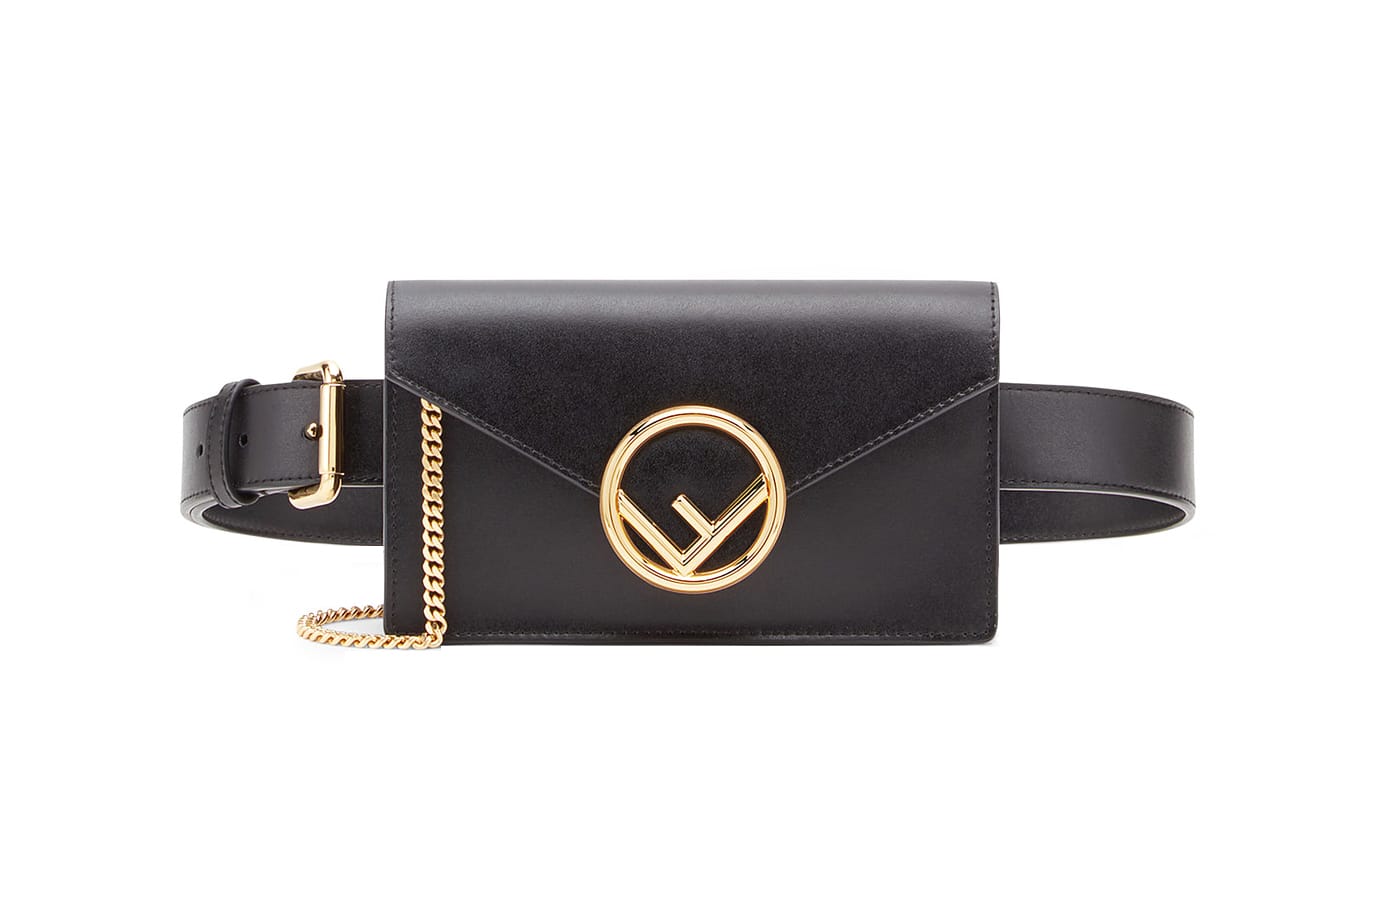 Fendi Releases Leather Belt Bag in 